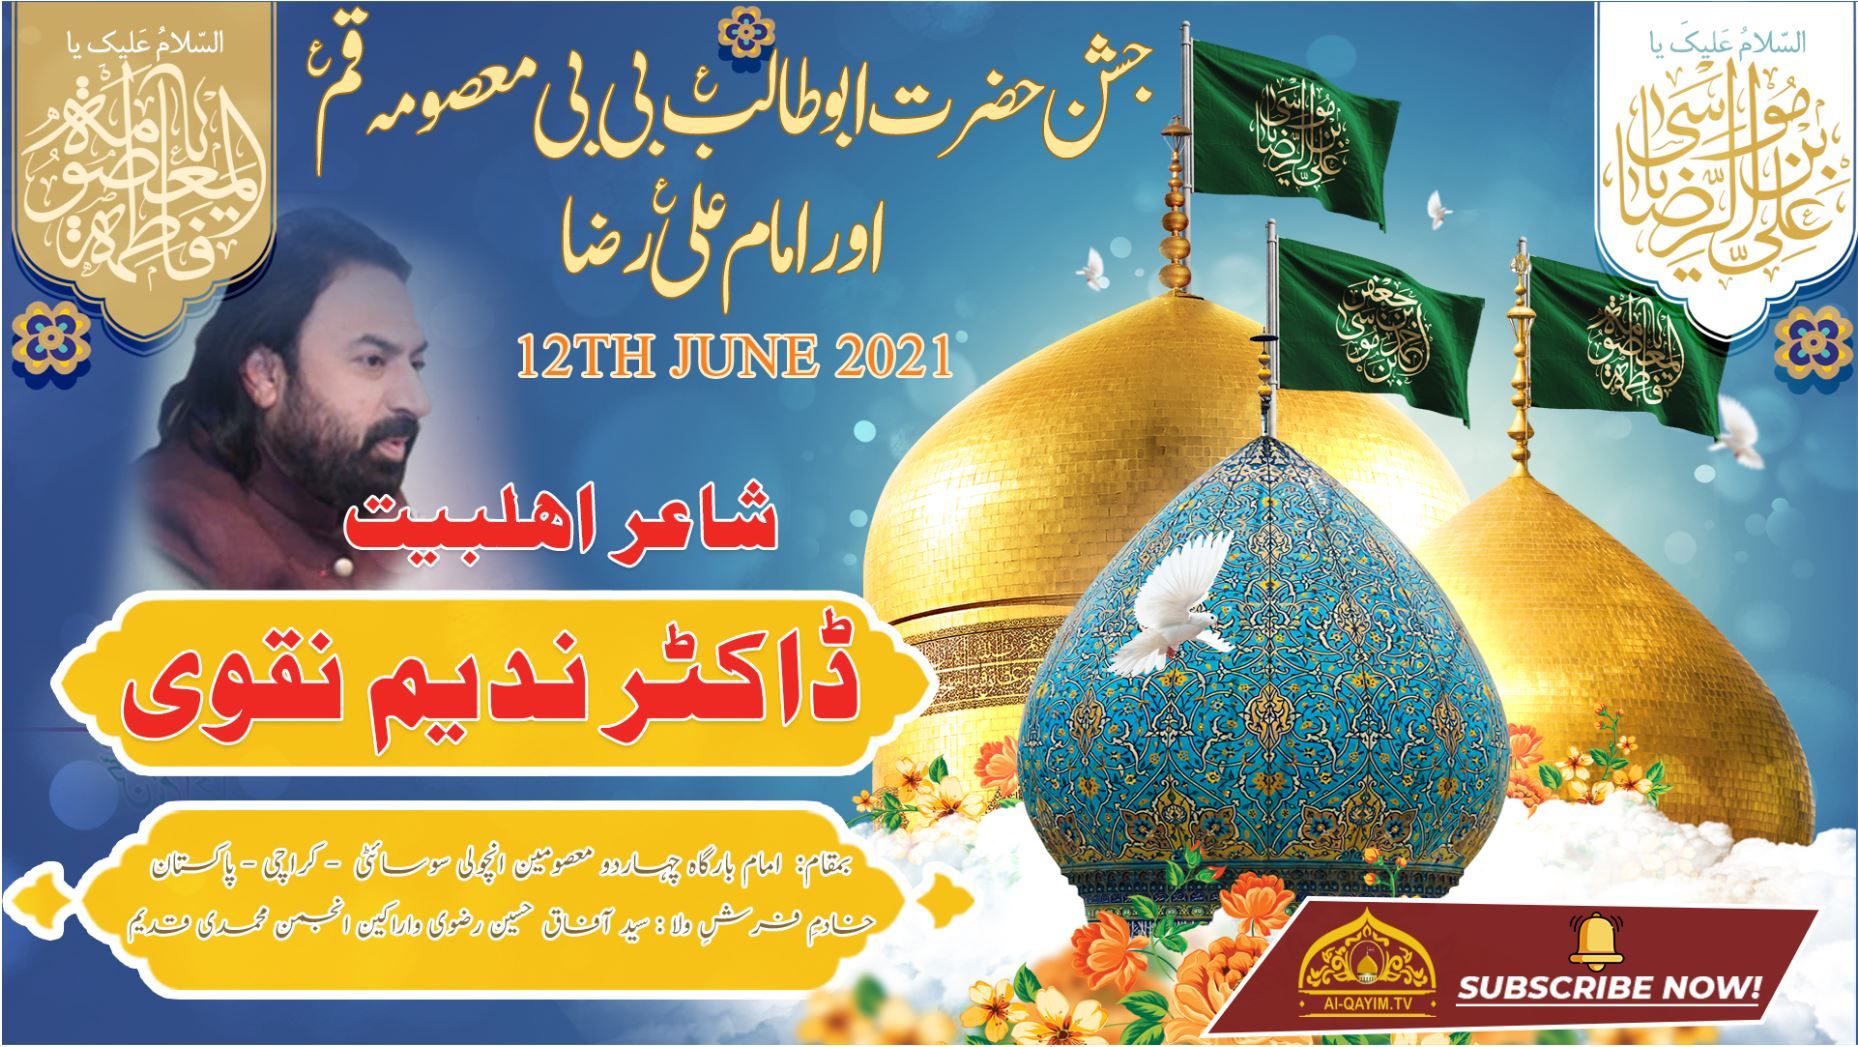 Dr Nadeem Naqvi | Jashan Bibi Masooma & Imam Ali Raza - 12 June 2021 - Ancholi - Karachi